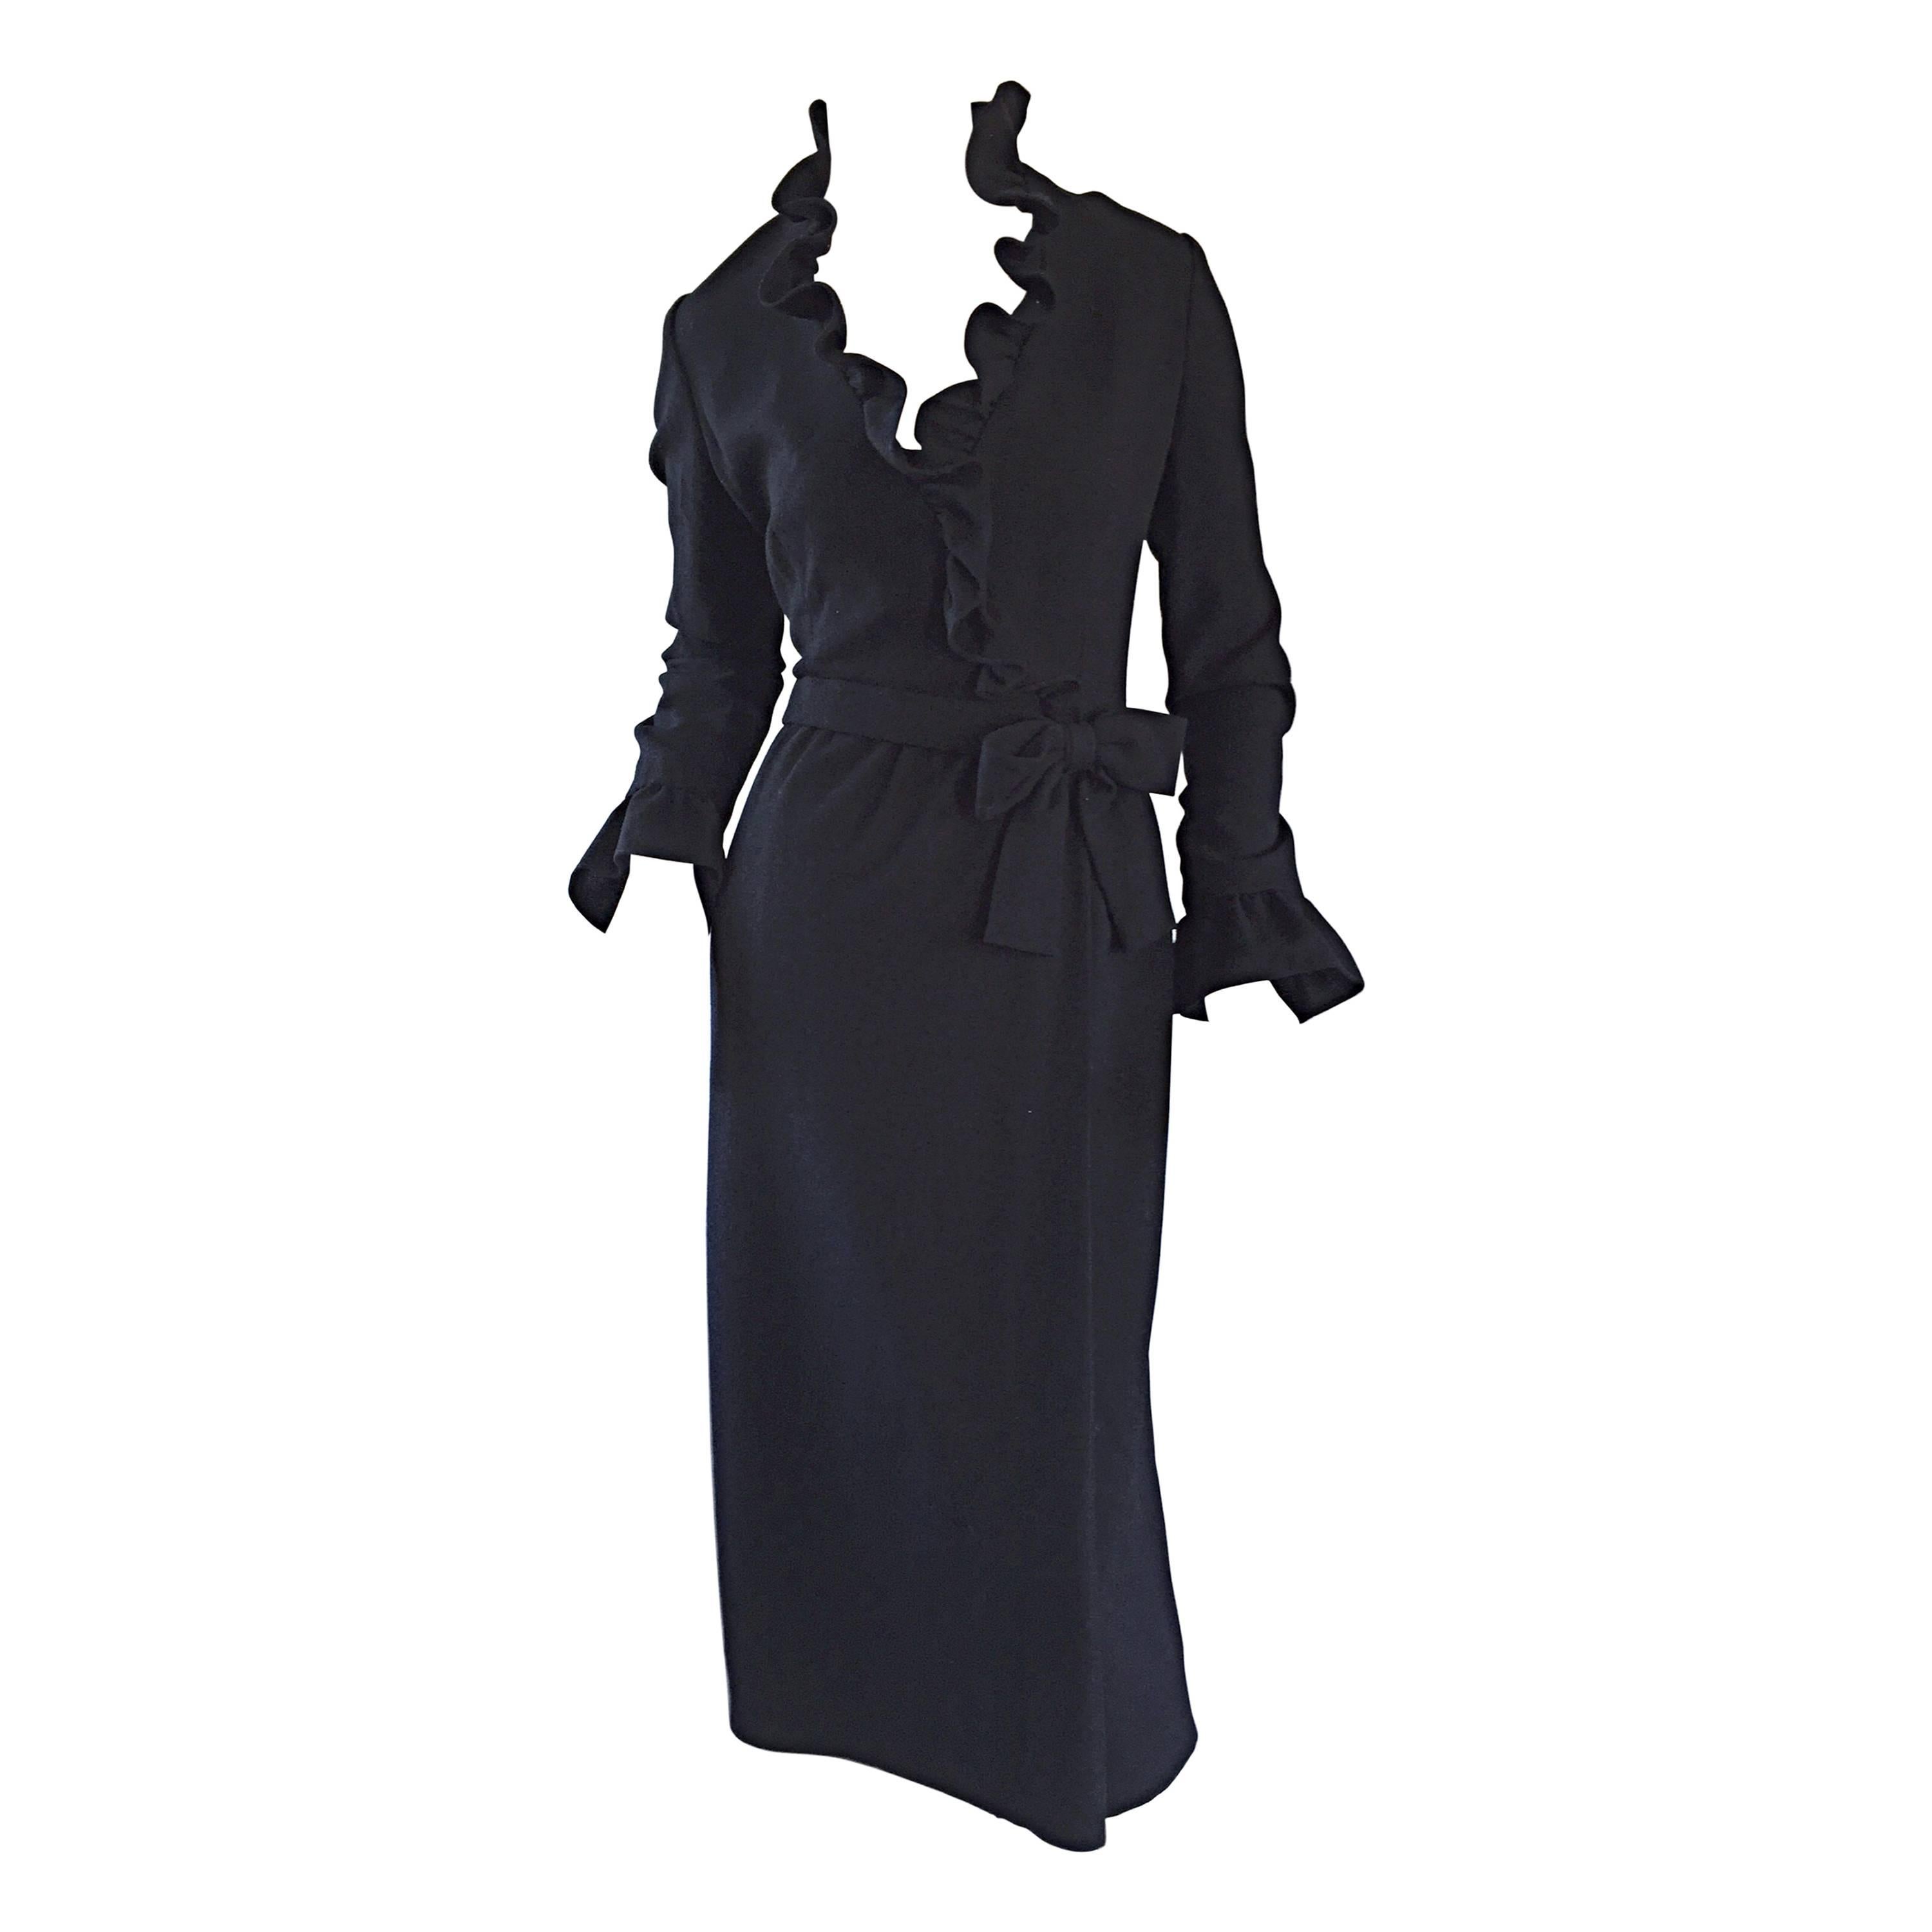 Chic Mollie Parnis 1960s 60s Vintage Black Wool Wrap Dress w/ Ruffles + Bow Belt